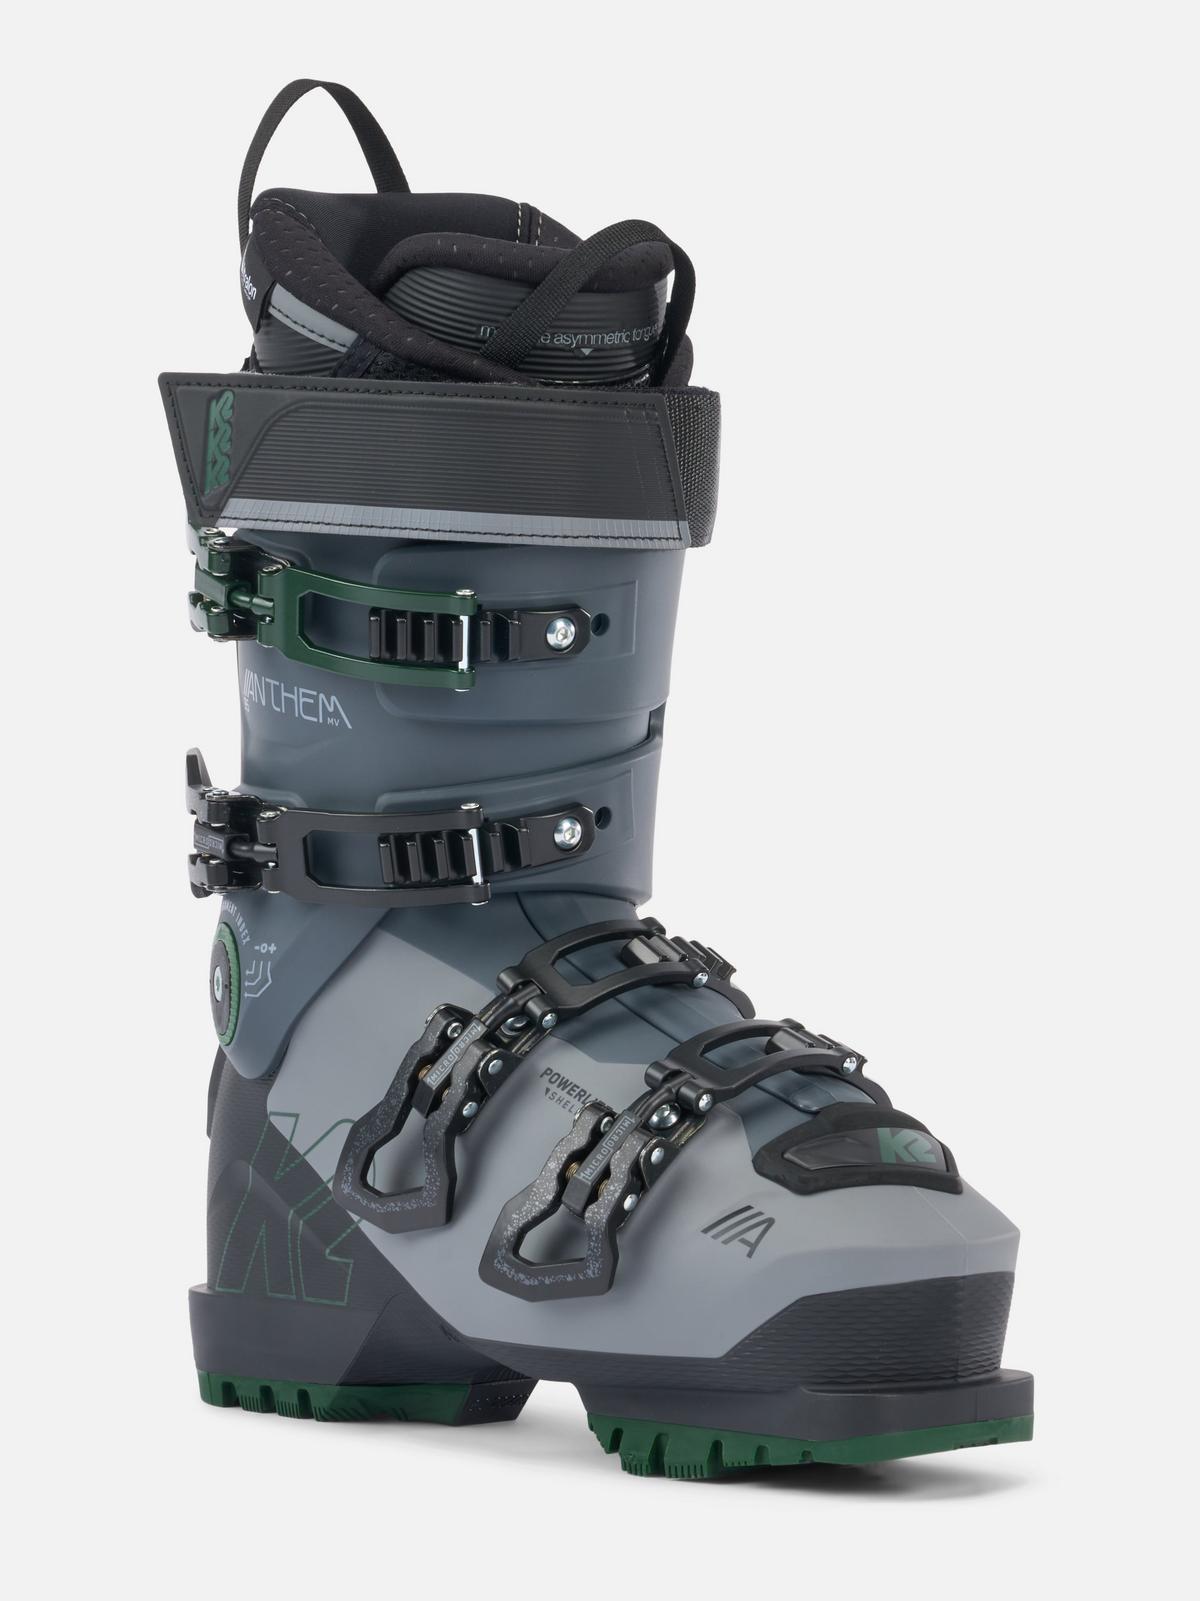 Anthem 95 Ski Boots | K2 Skis and K2 Snowboarding